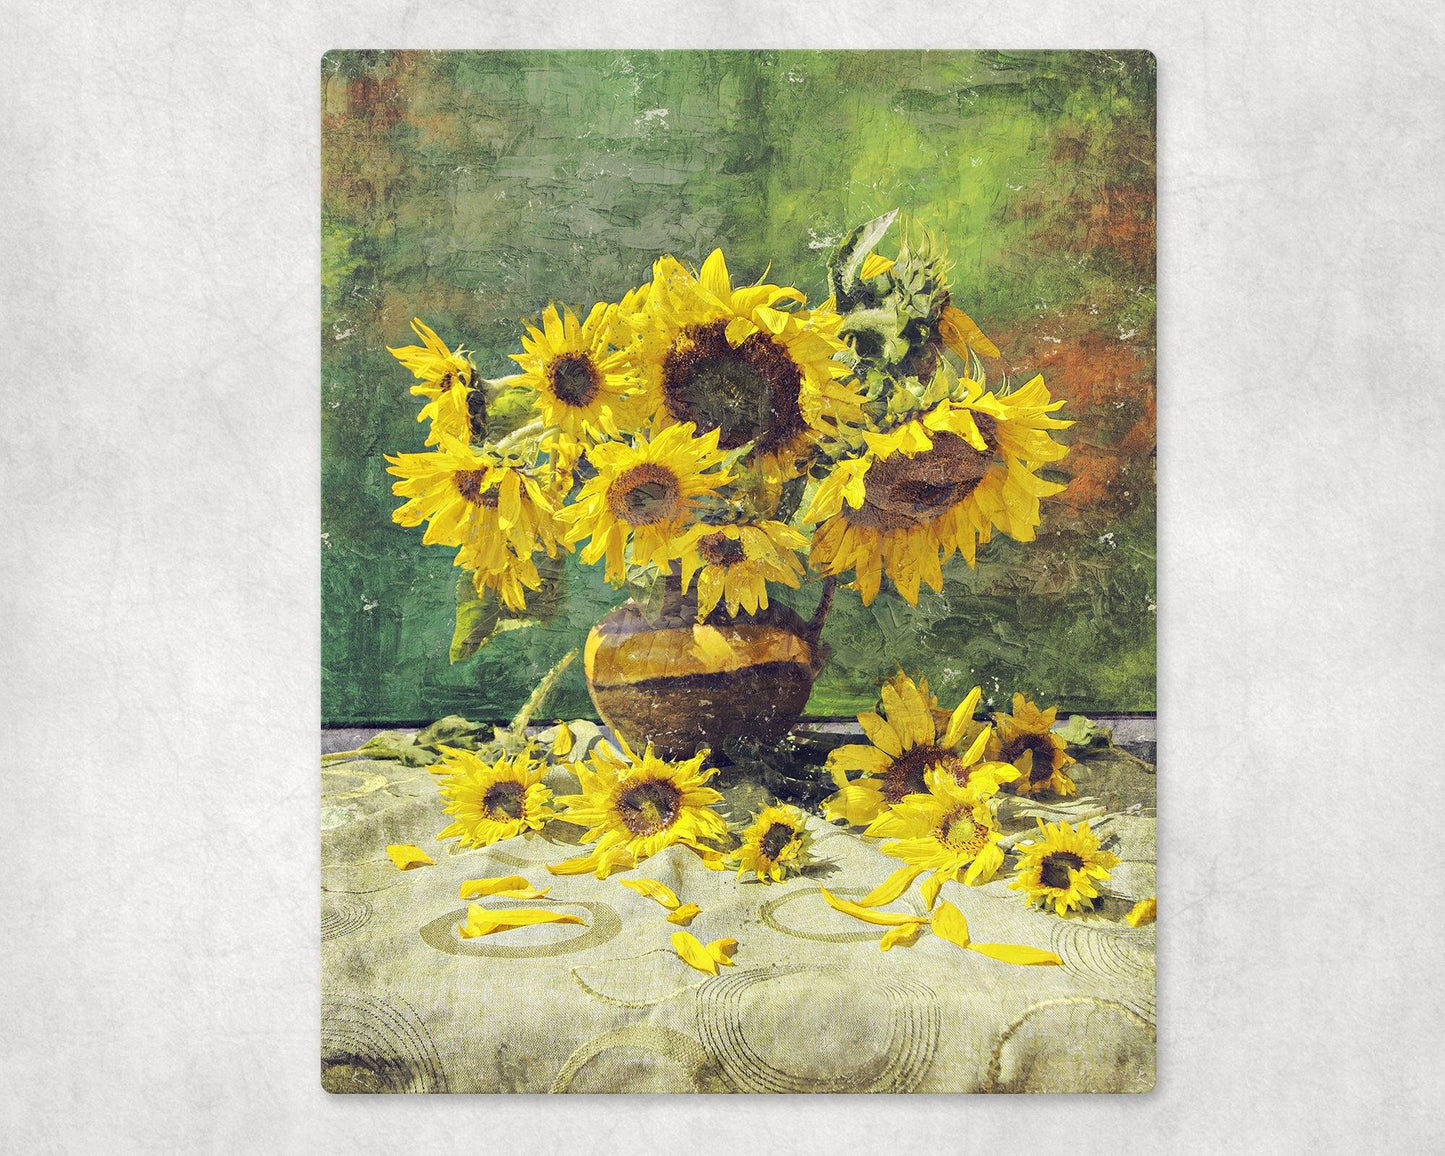 Sunflowers in Vase Still Life Metal Photo Panel - 8x10 - Schoppix Gifts